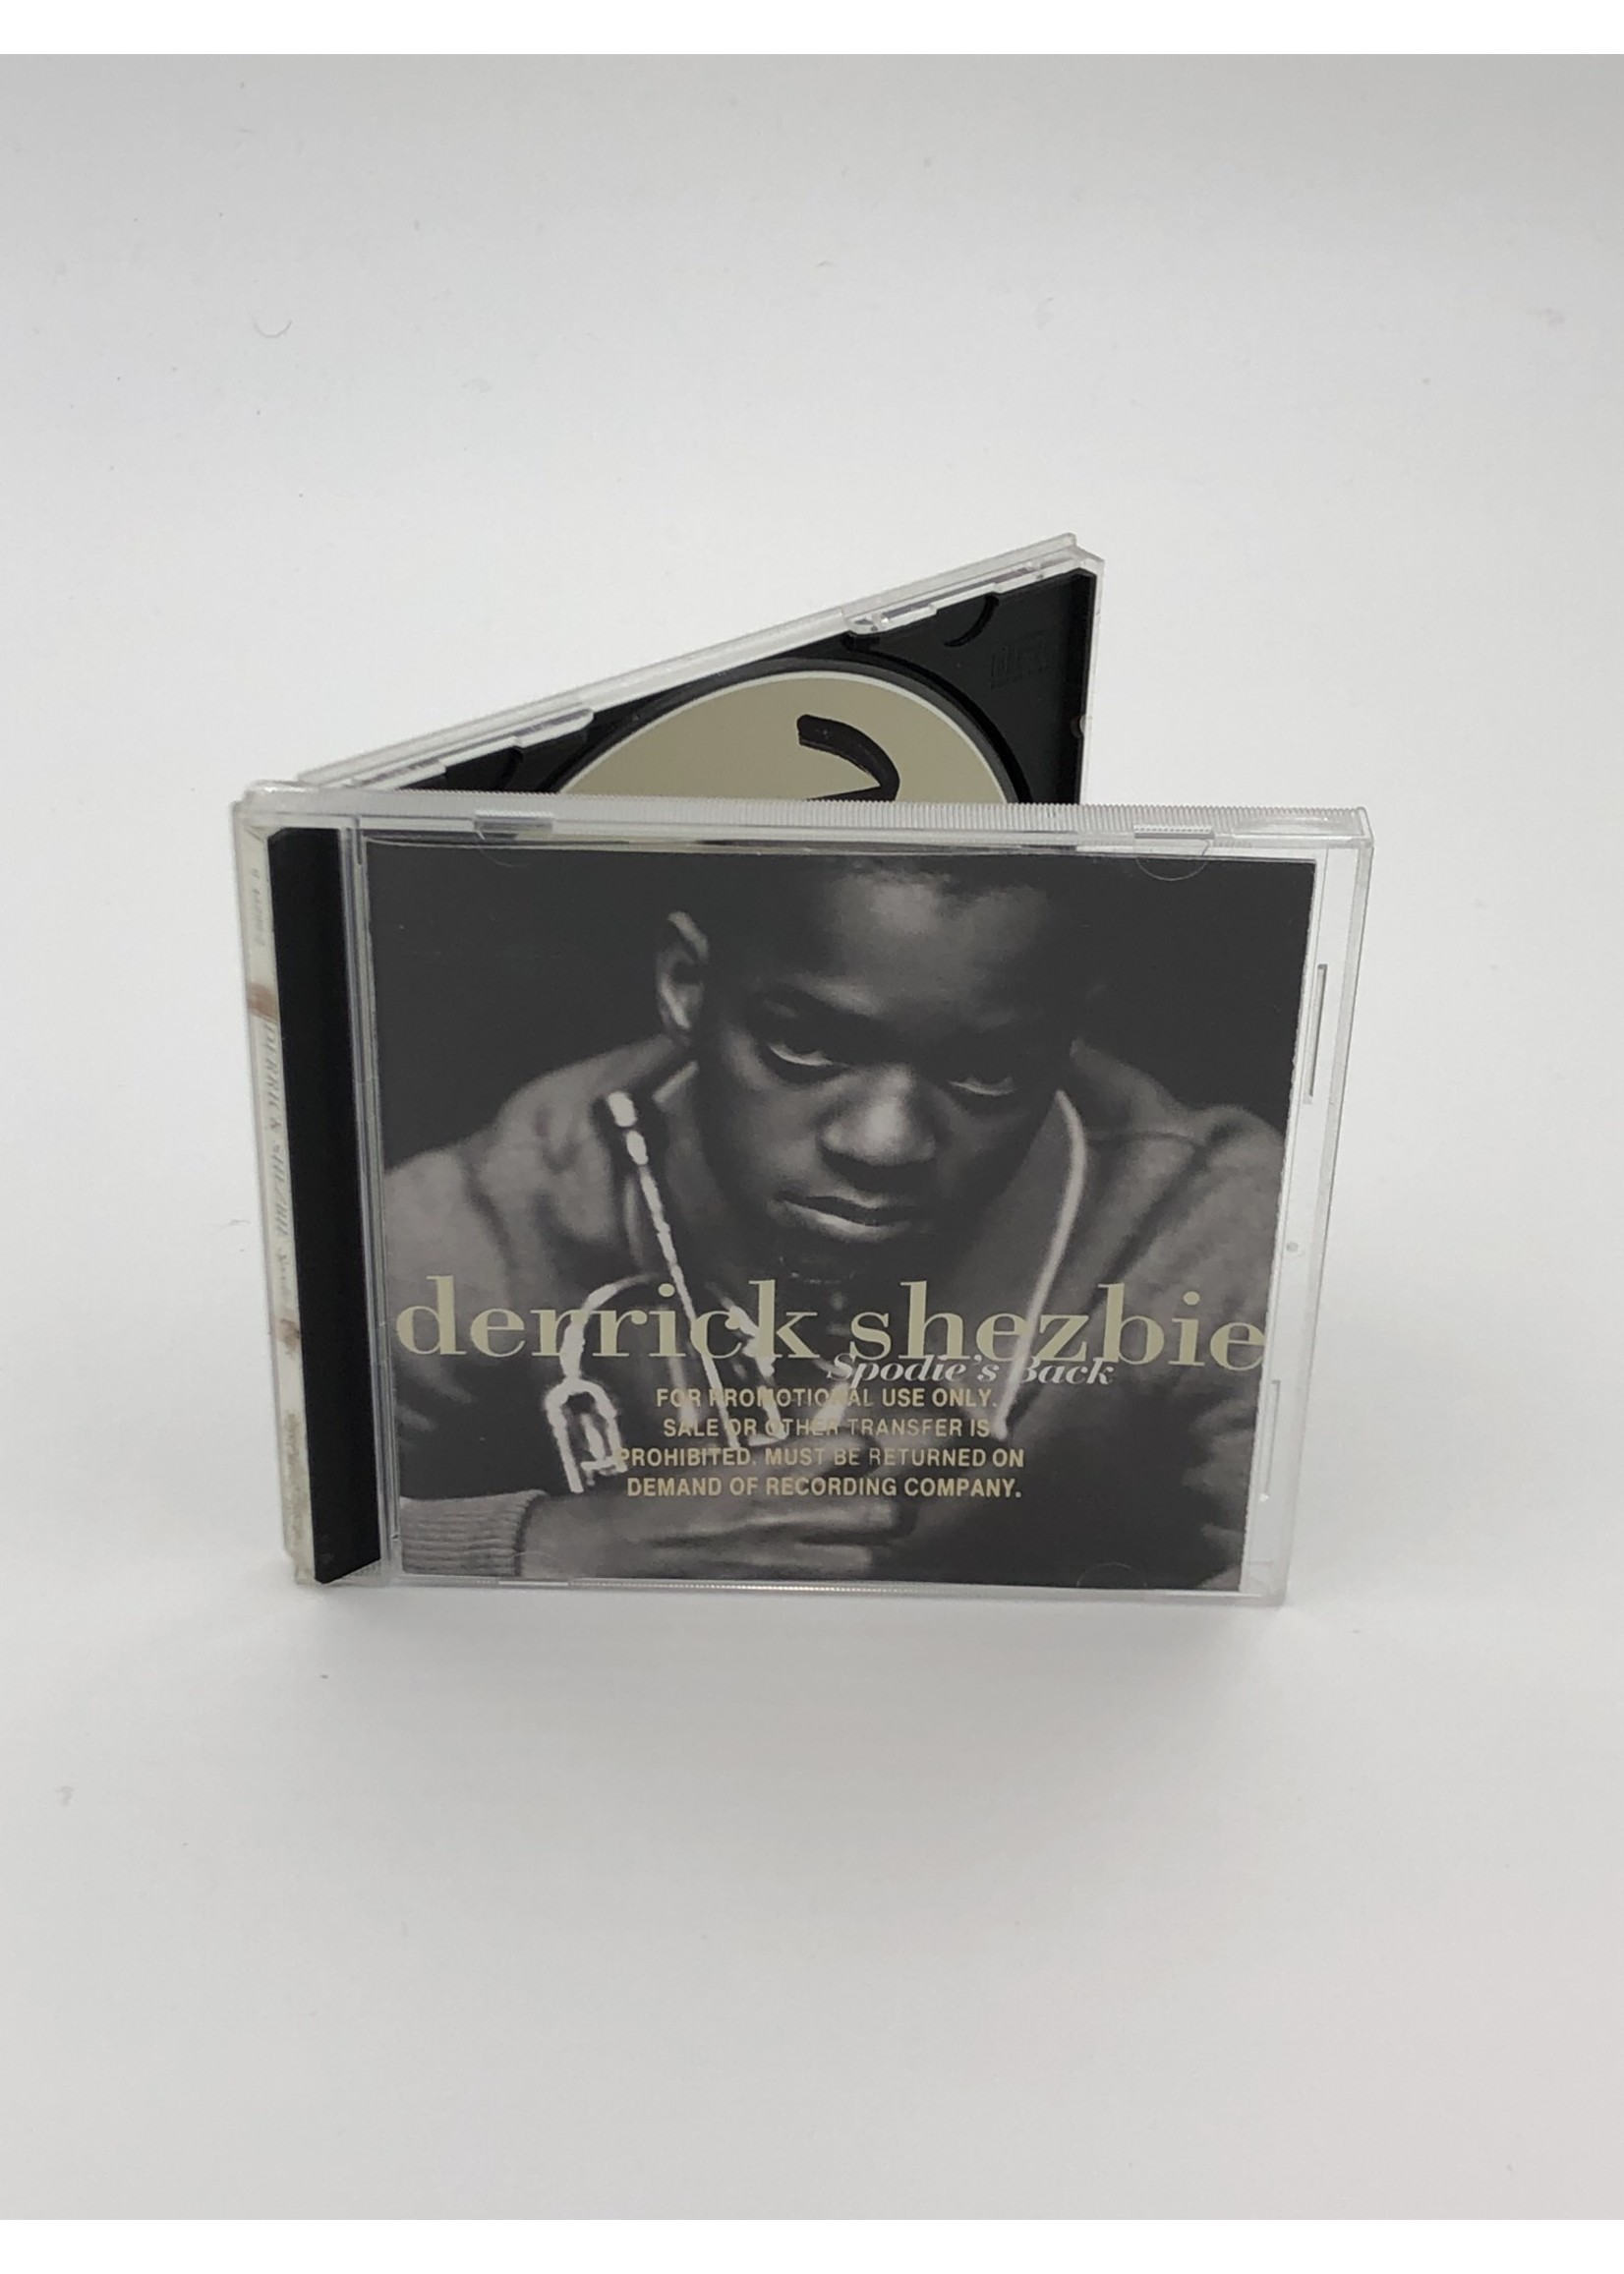 CD Derrick Shezbie: Spodies Back CD